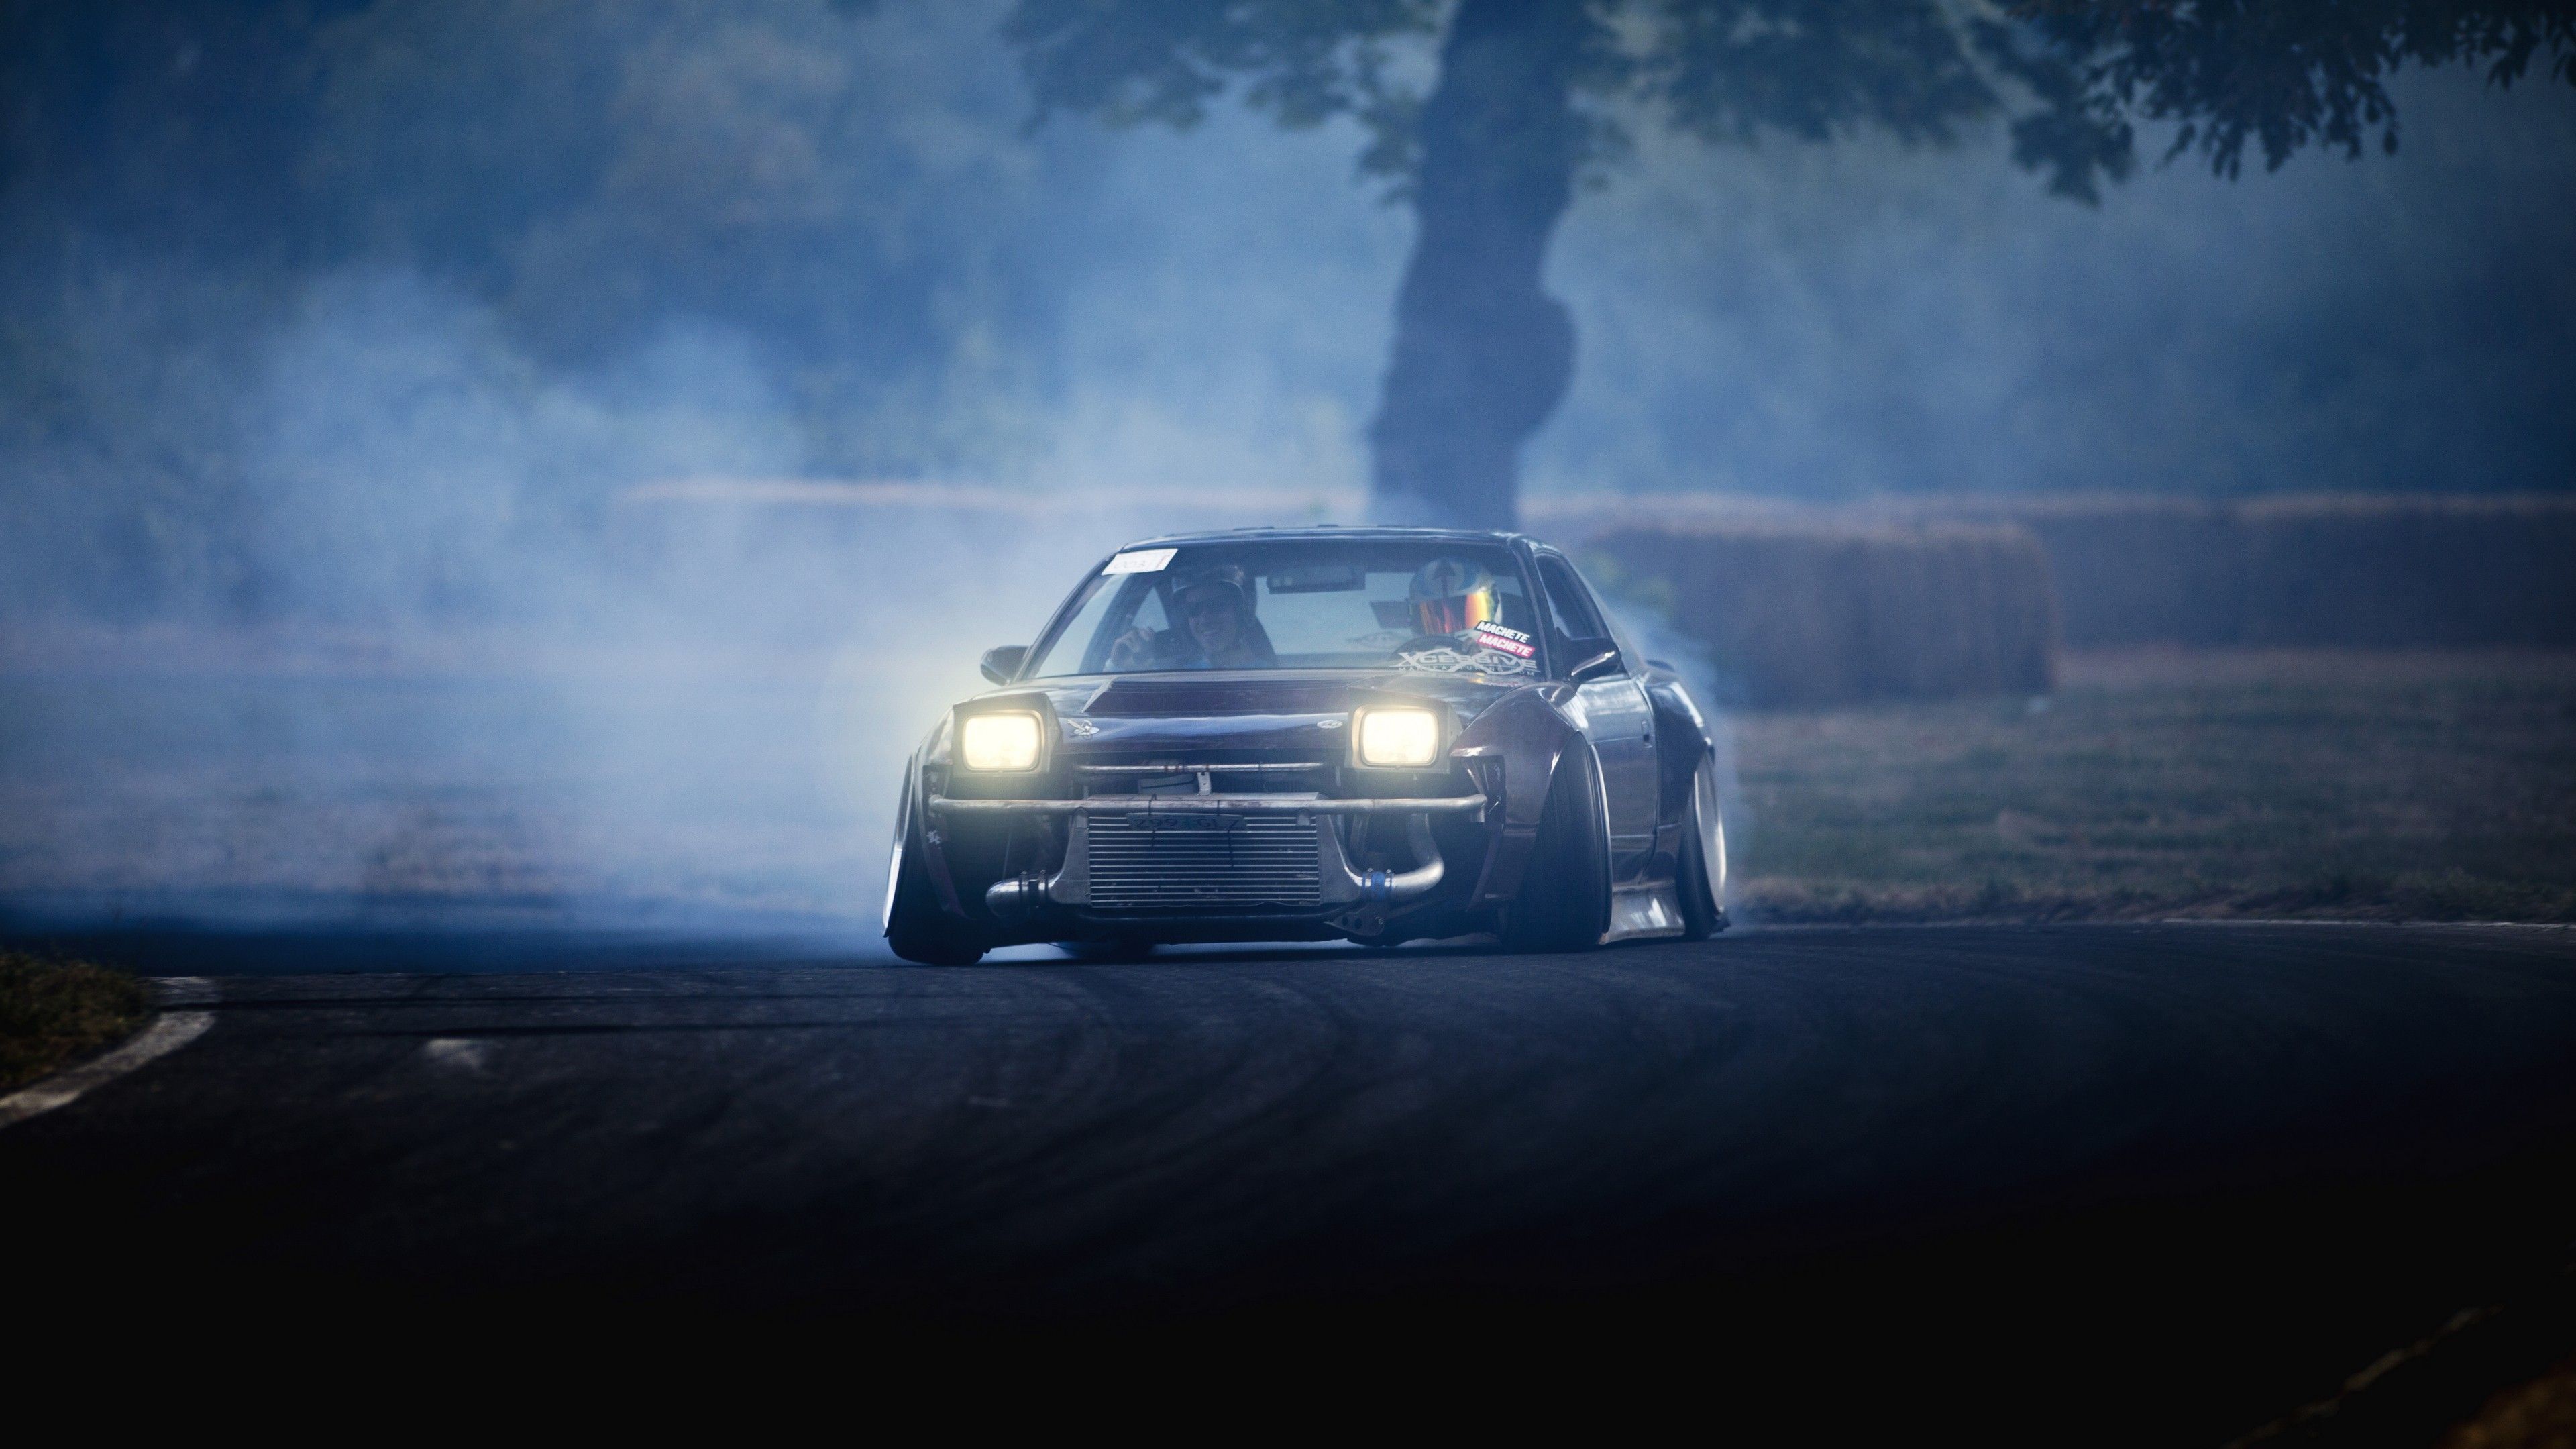 Drifting Car 4k smoke wallpaper, HD .co.kr